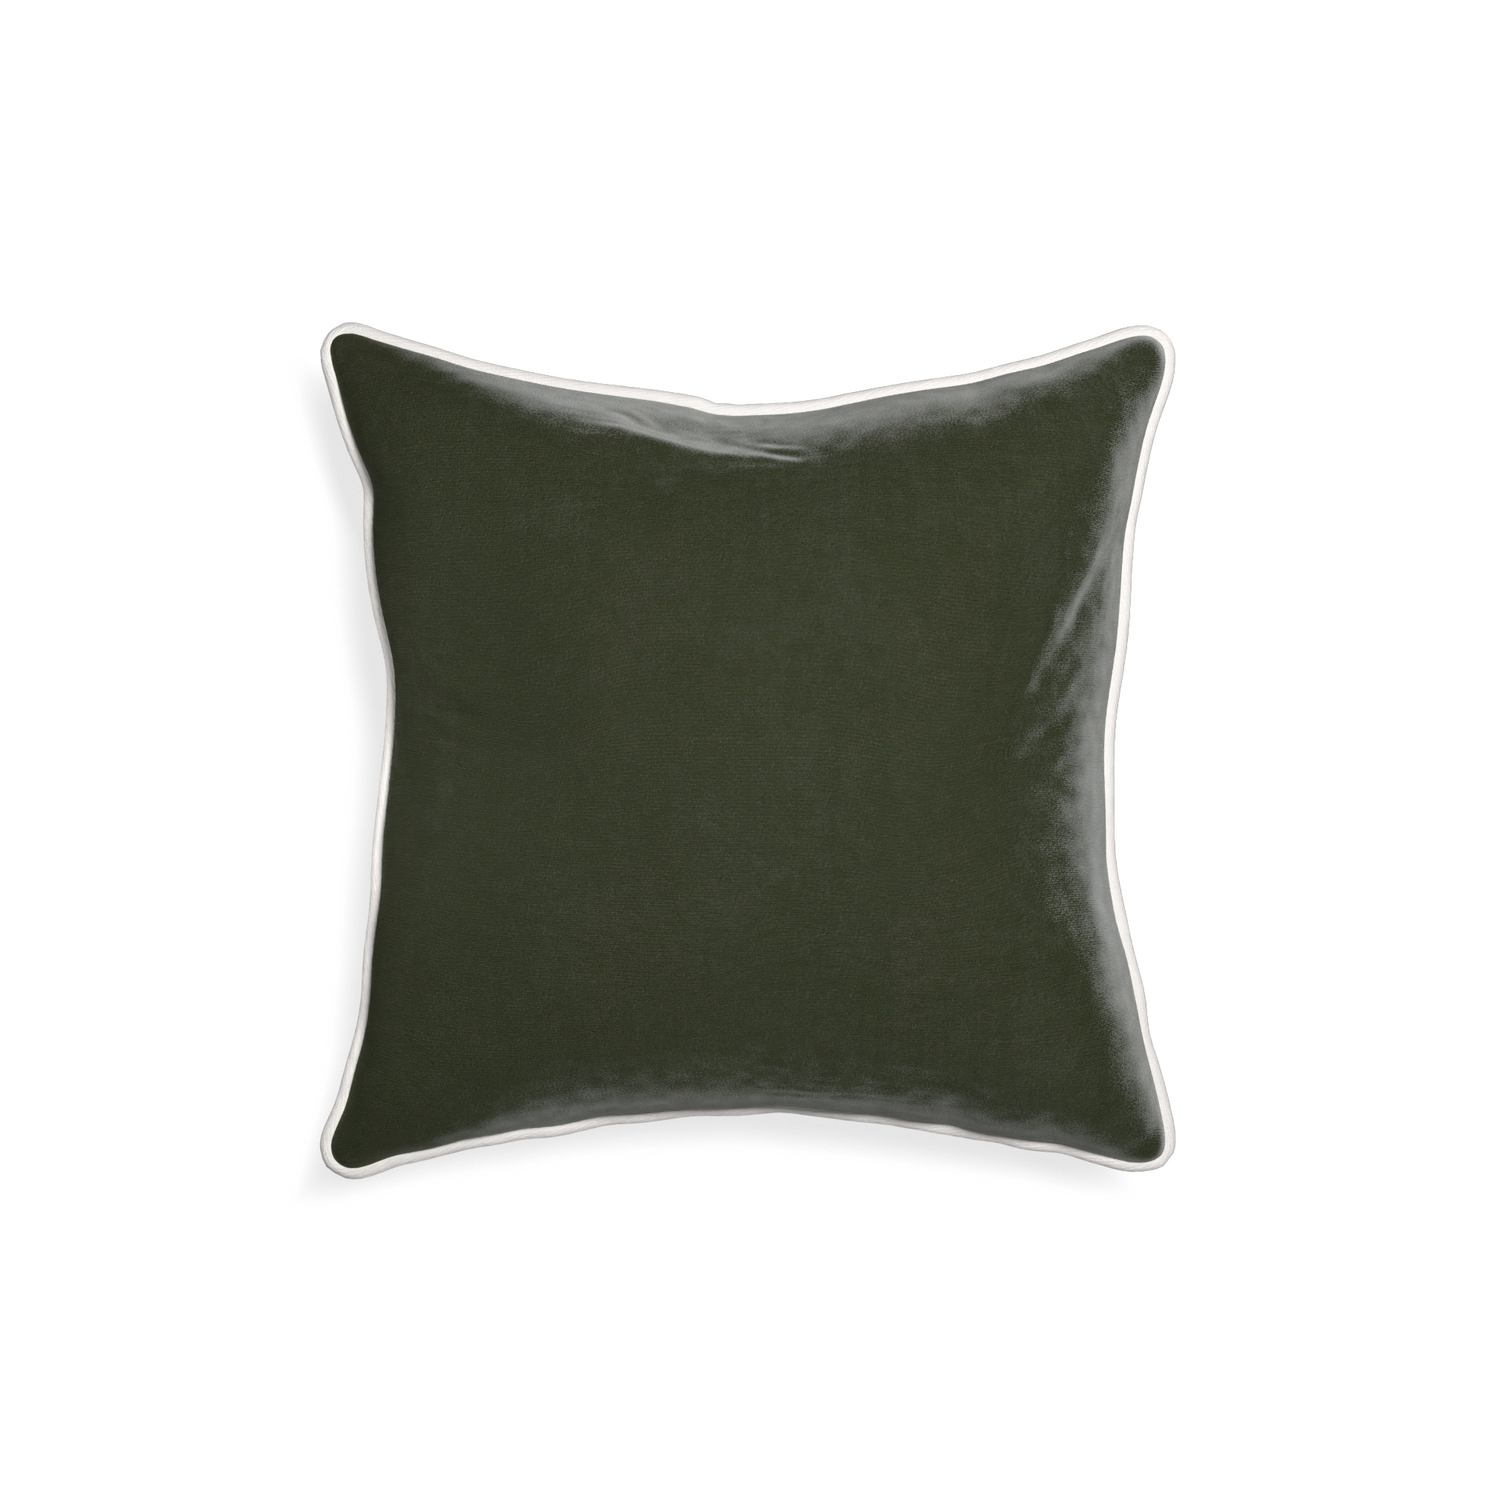 square fern green velvet pillow with white piping 